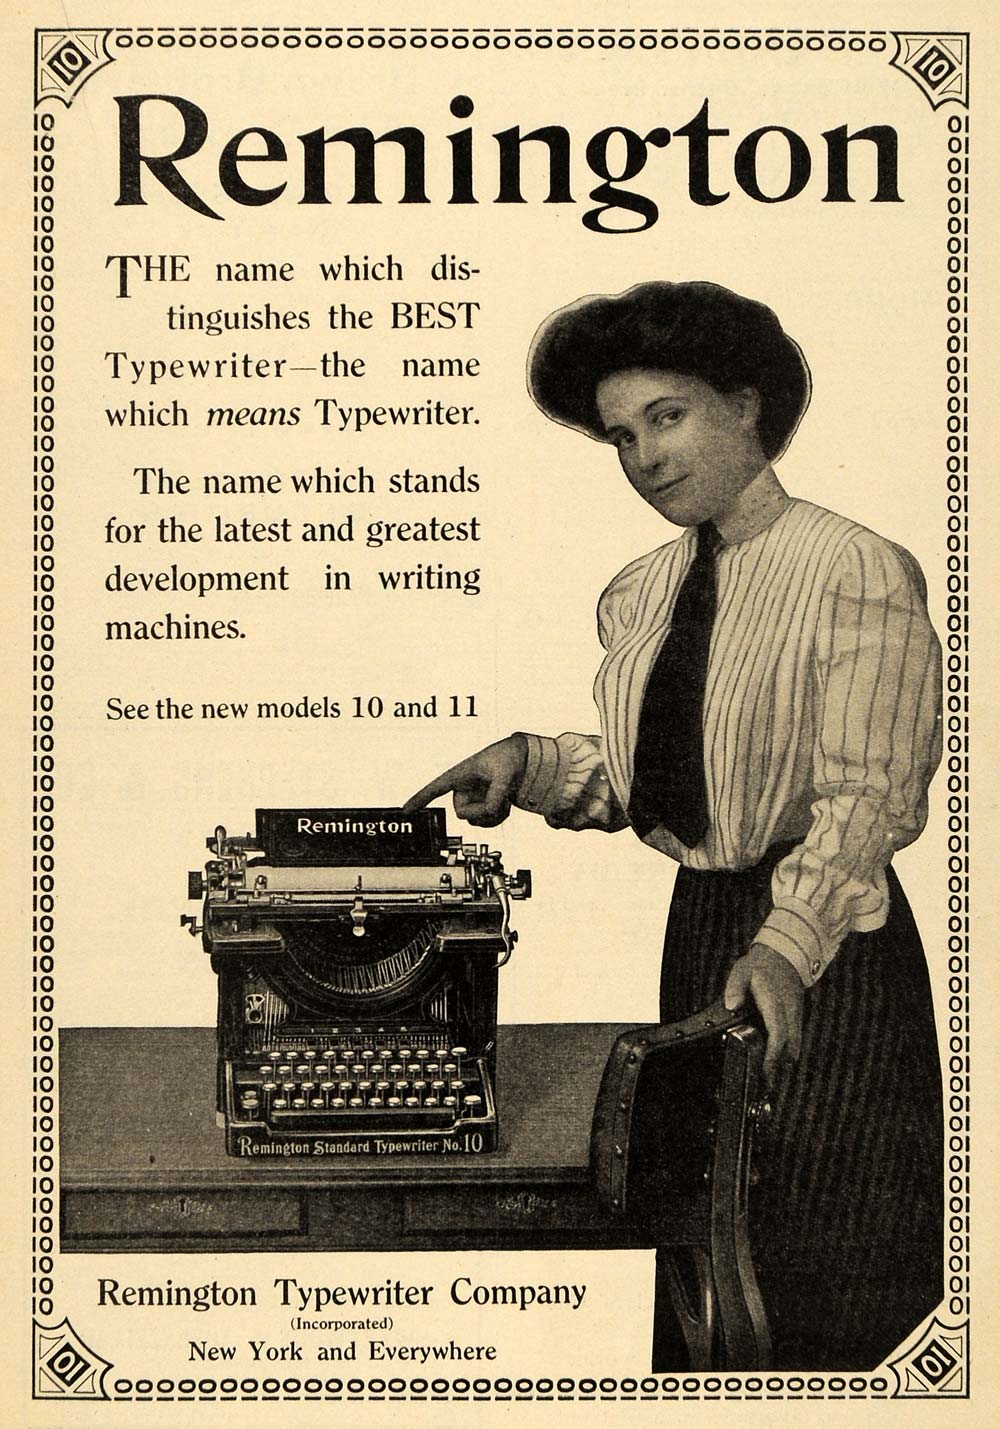 1909 Ad Wyckoff Seamans Benedict Typewriter Bookkeeper - ORIGINAL TIN4